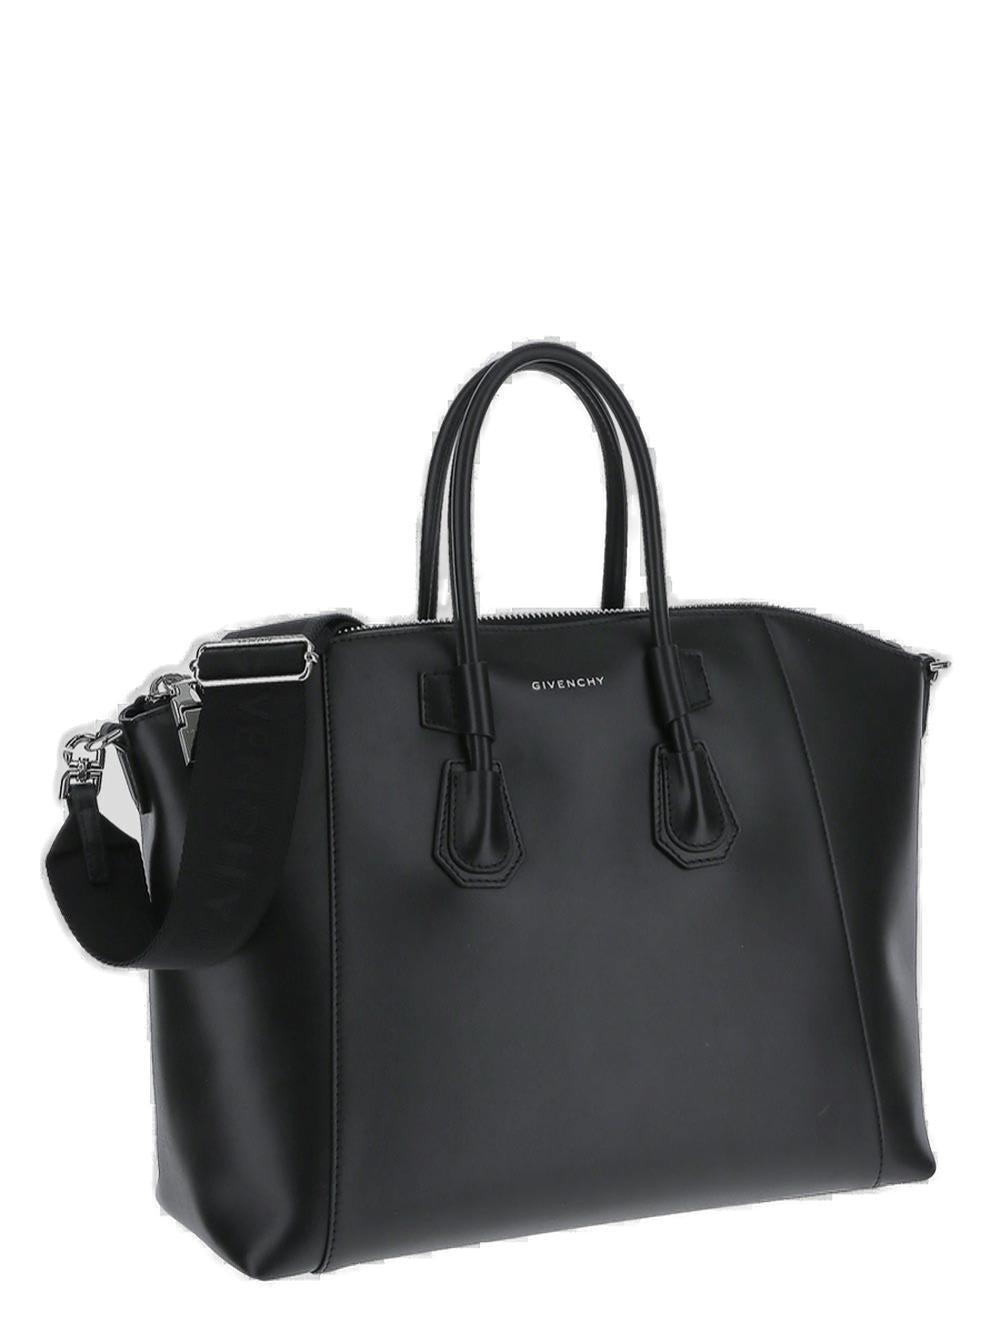 Givenchy - Antigona Sport Small Leather Tote - Black - One Size - Net A Porter